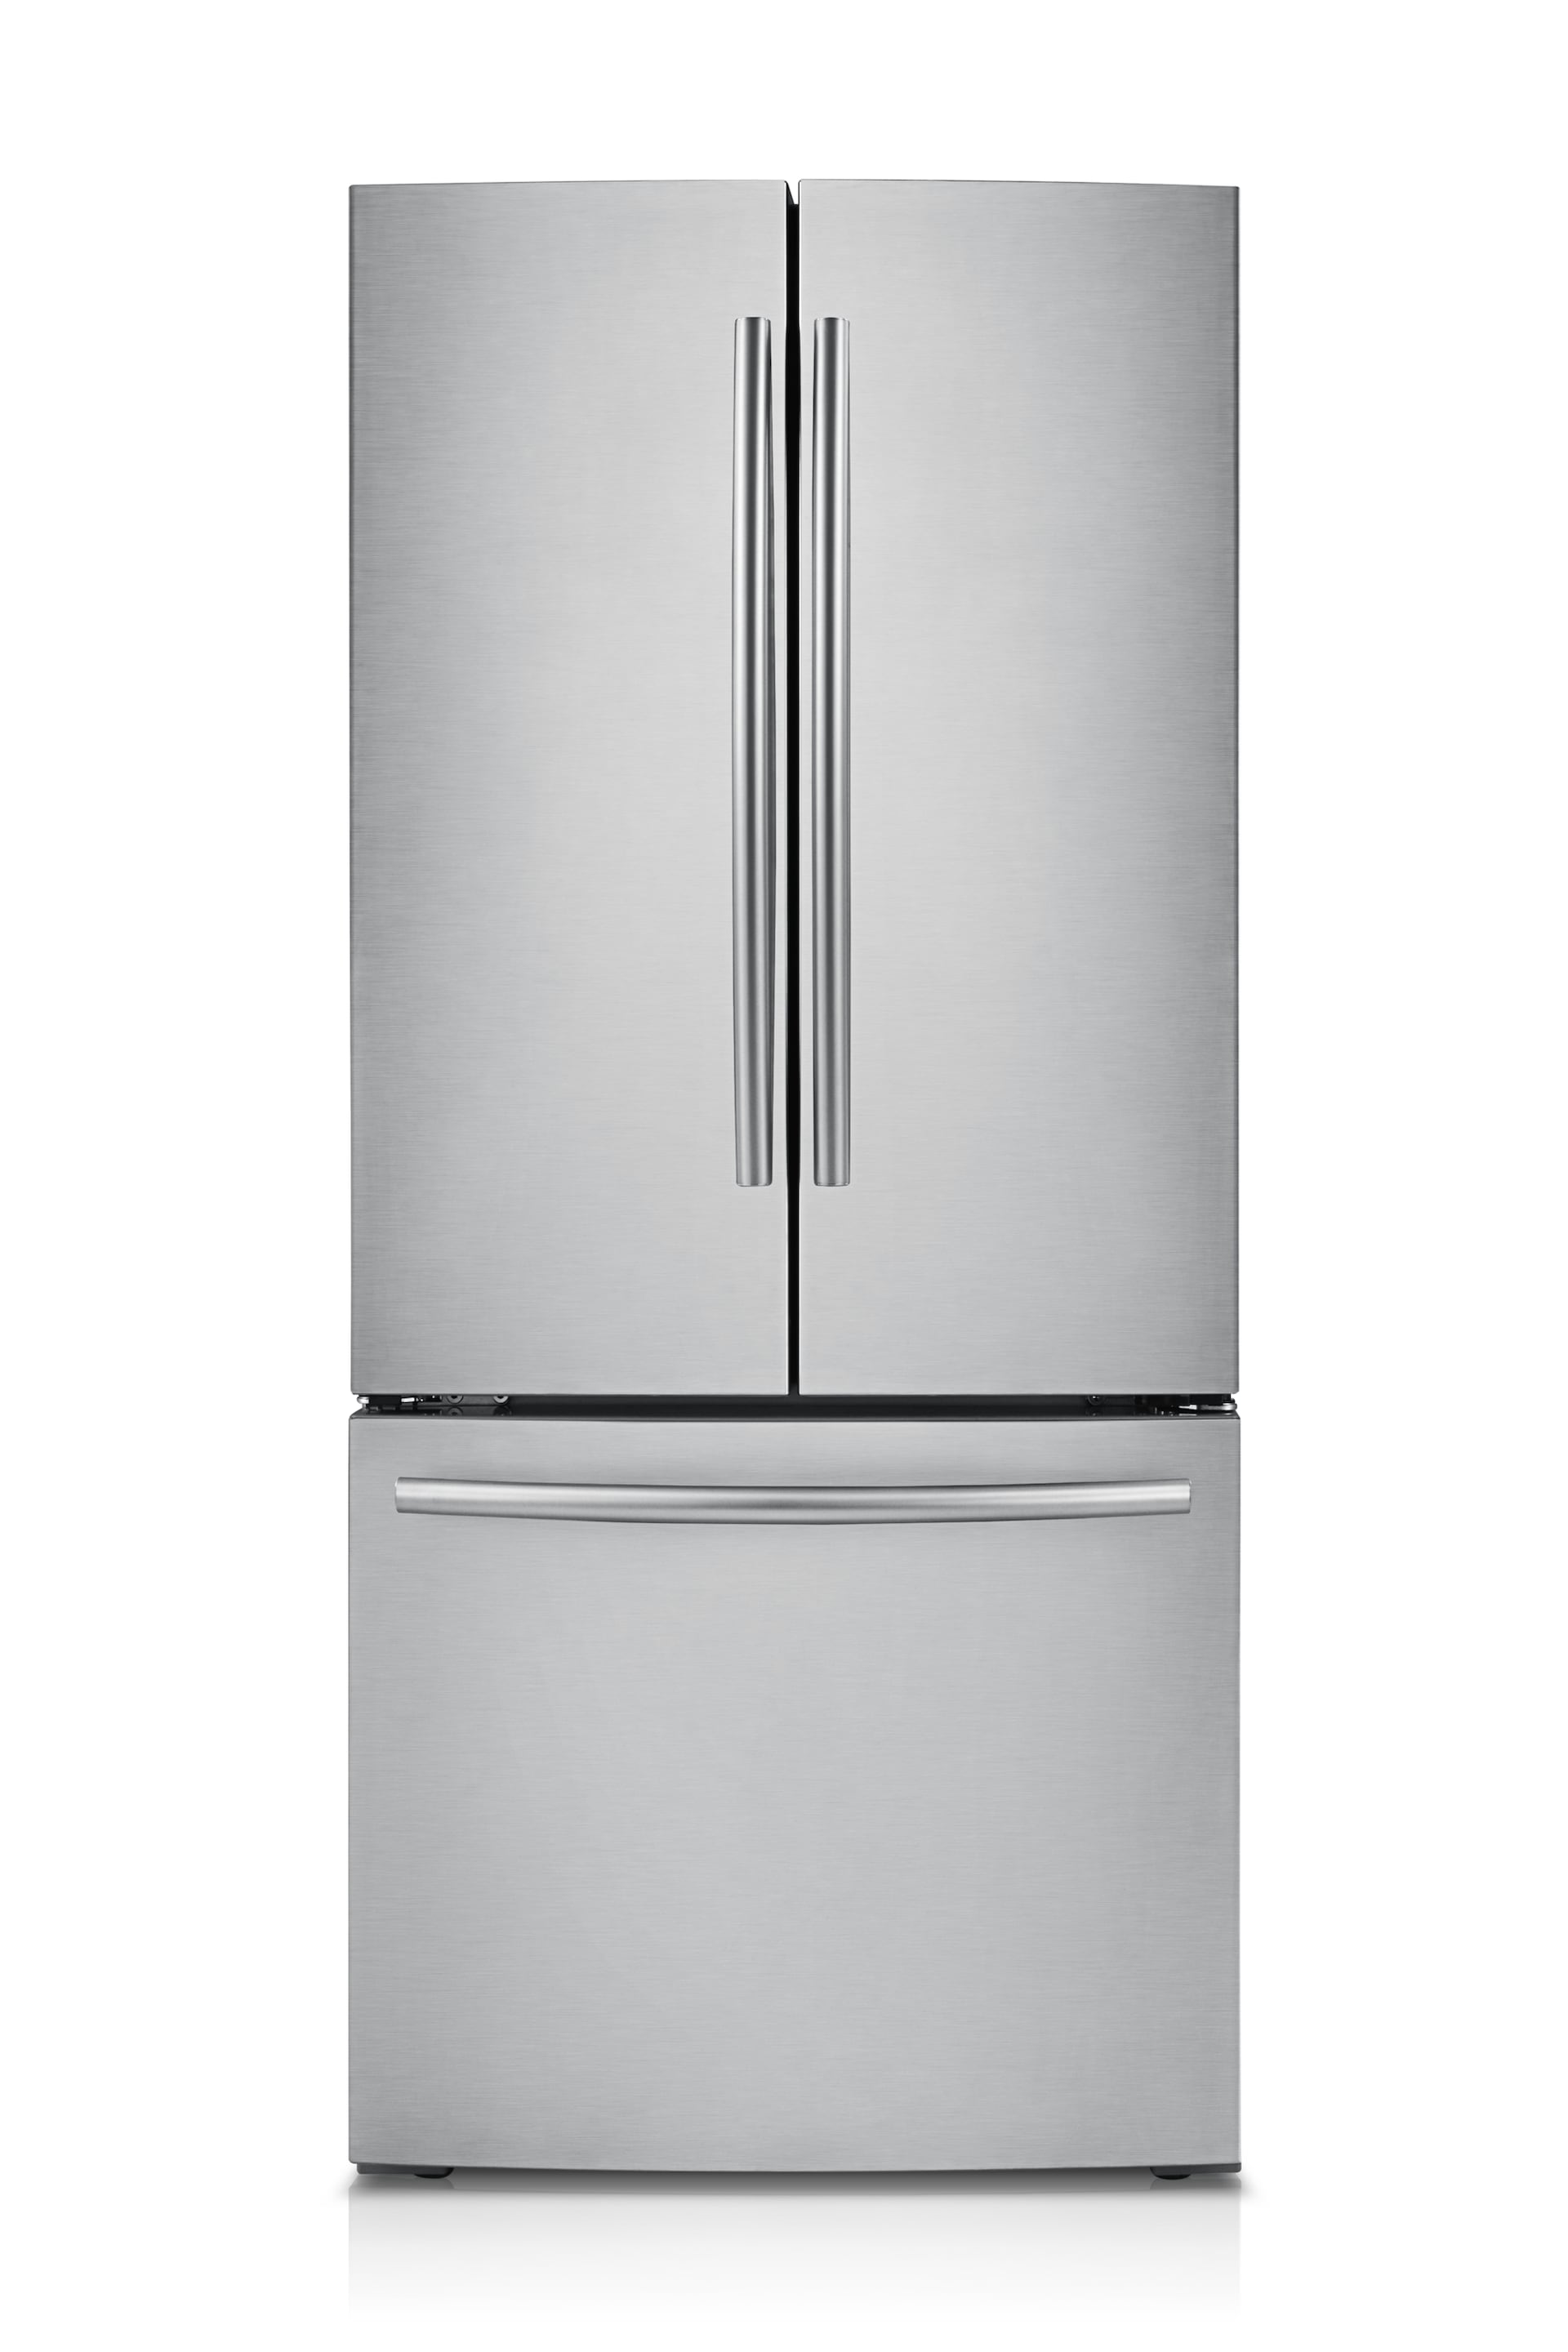 RF220NCTASR French Door Refrigerator with Digital Inverter Technology